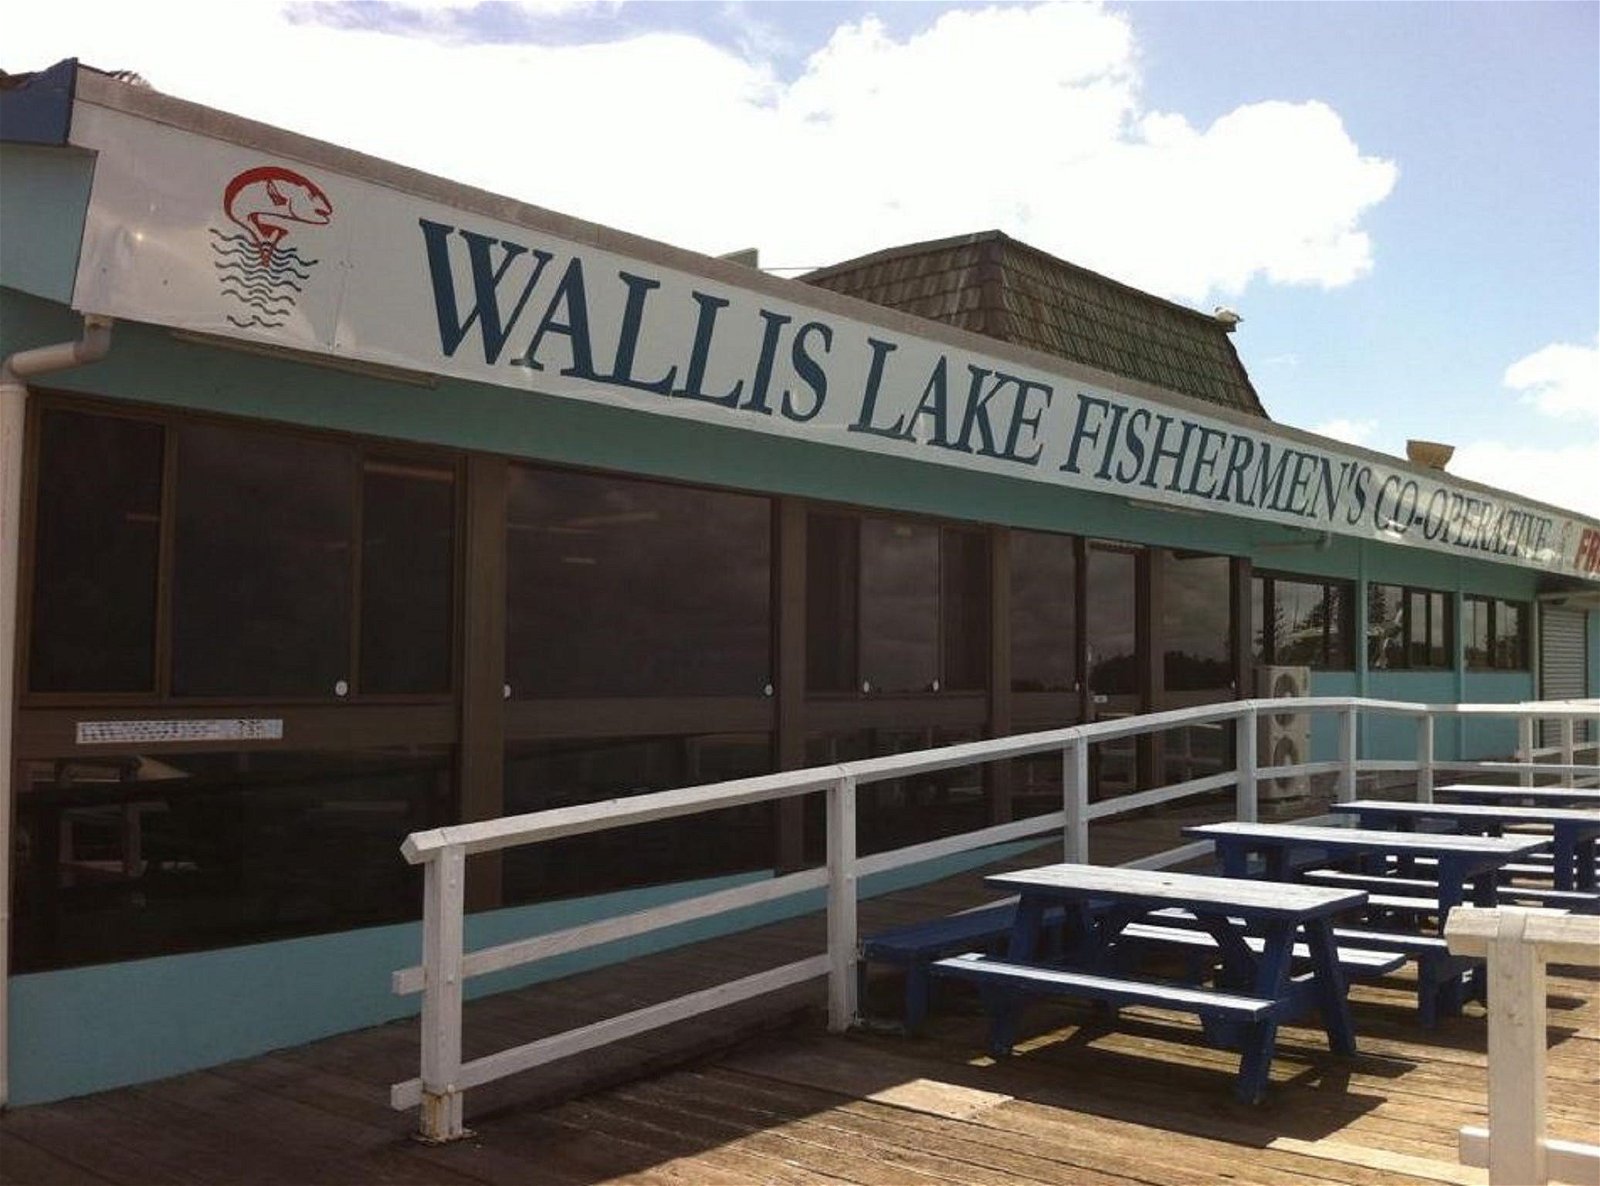 Wallis Lake Fishermans Co-op - Food Delivery Shop